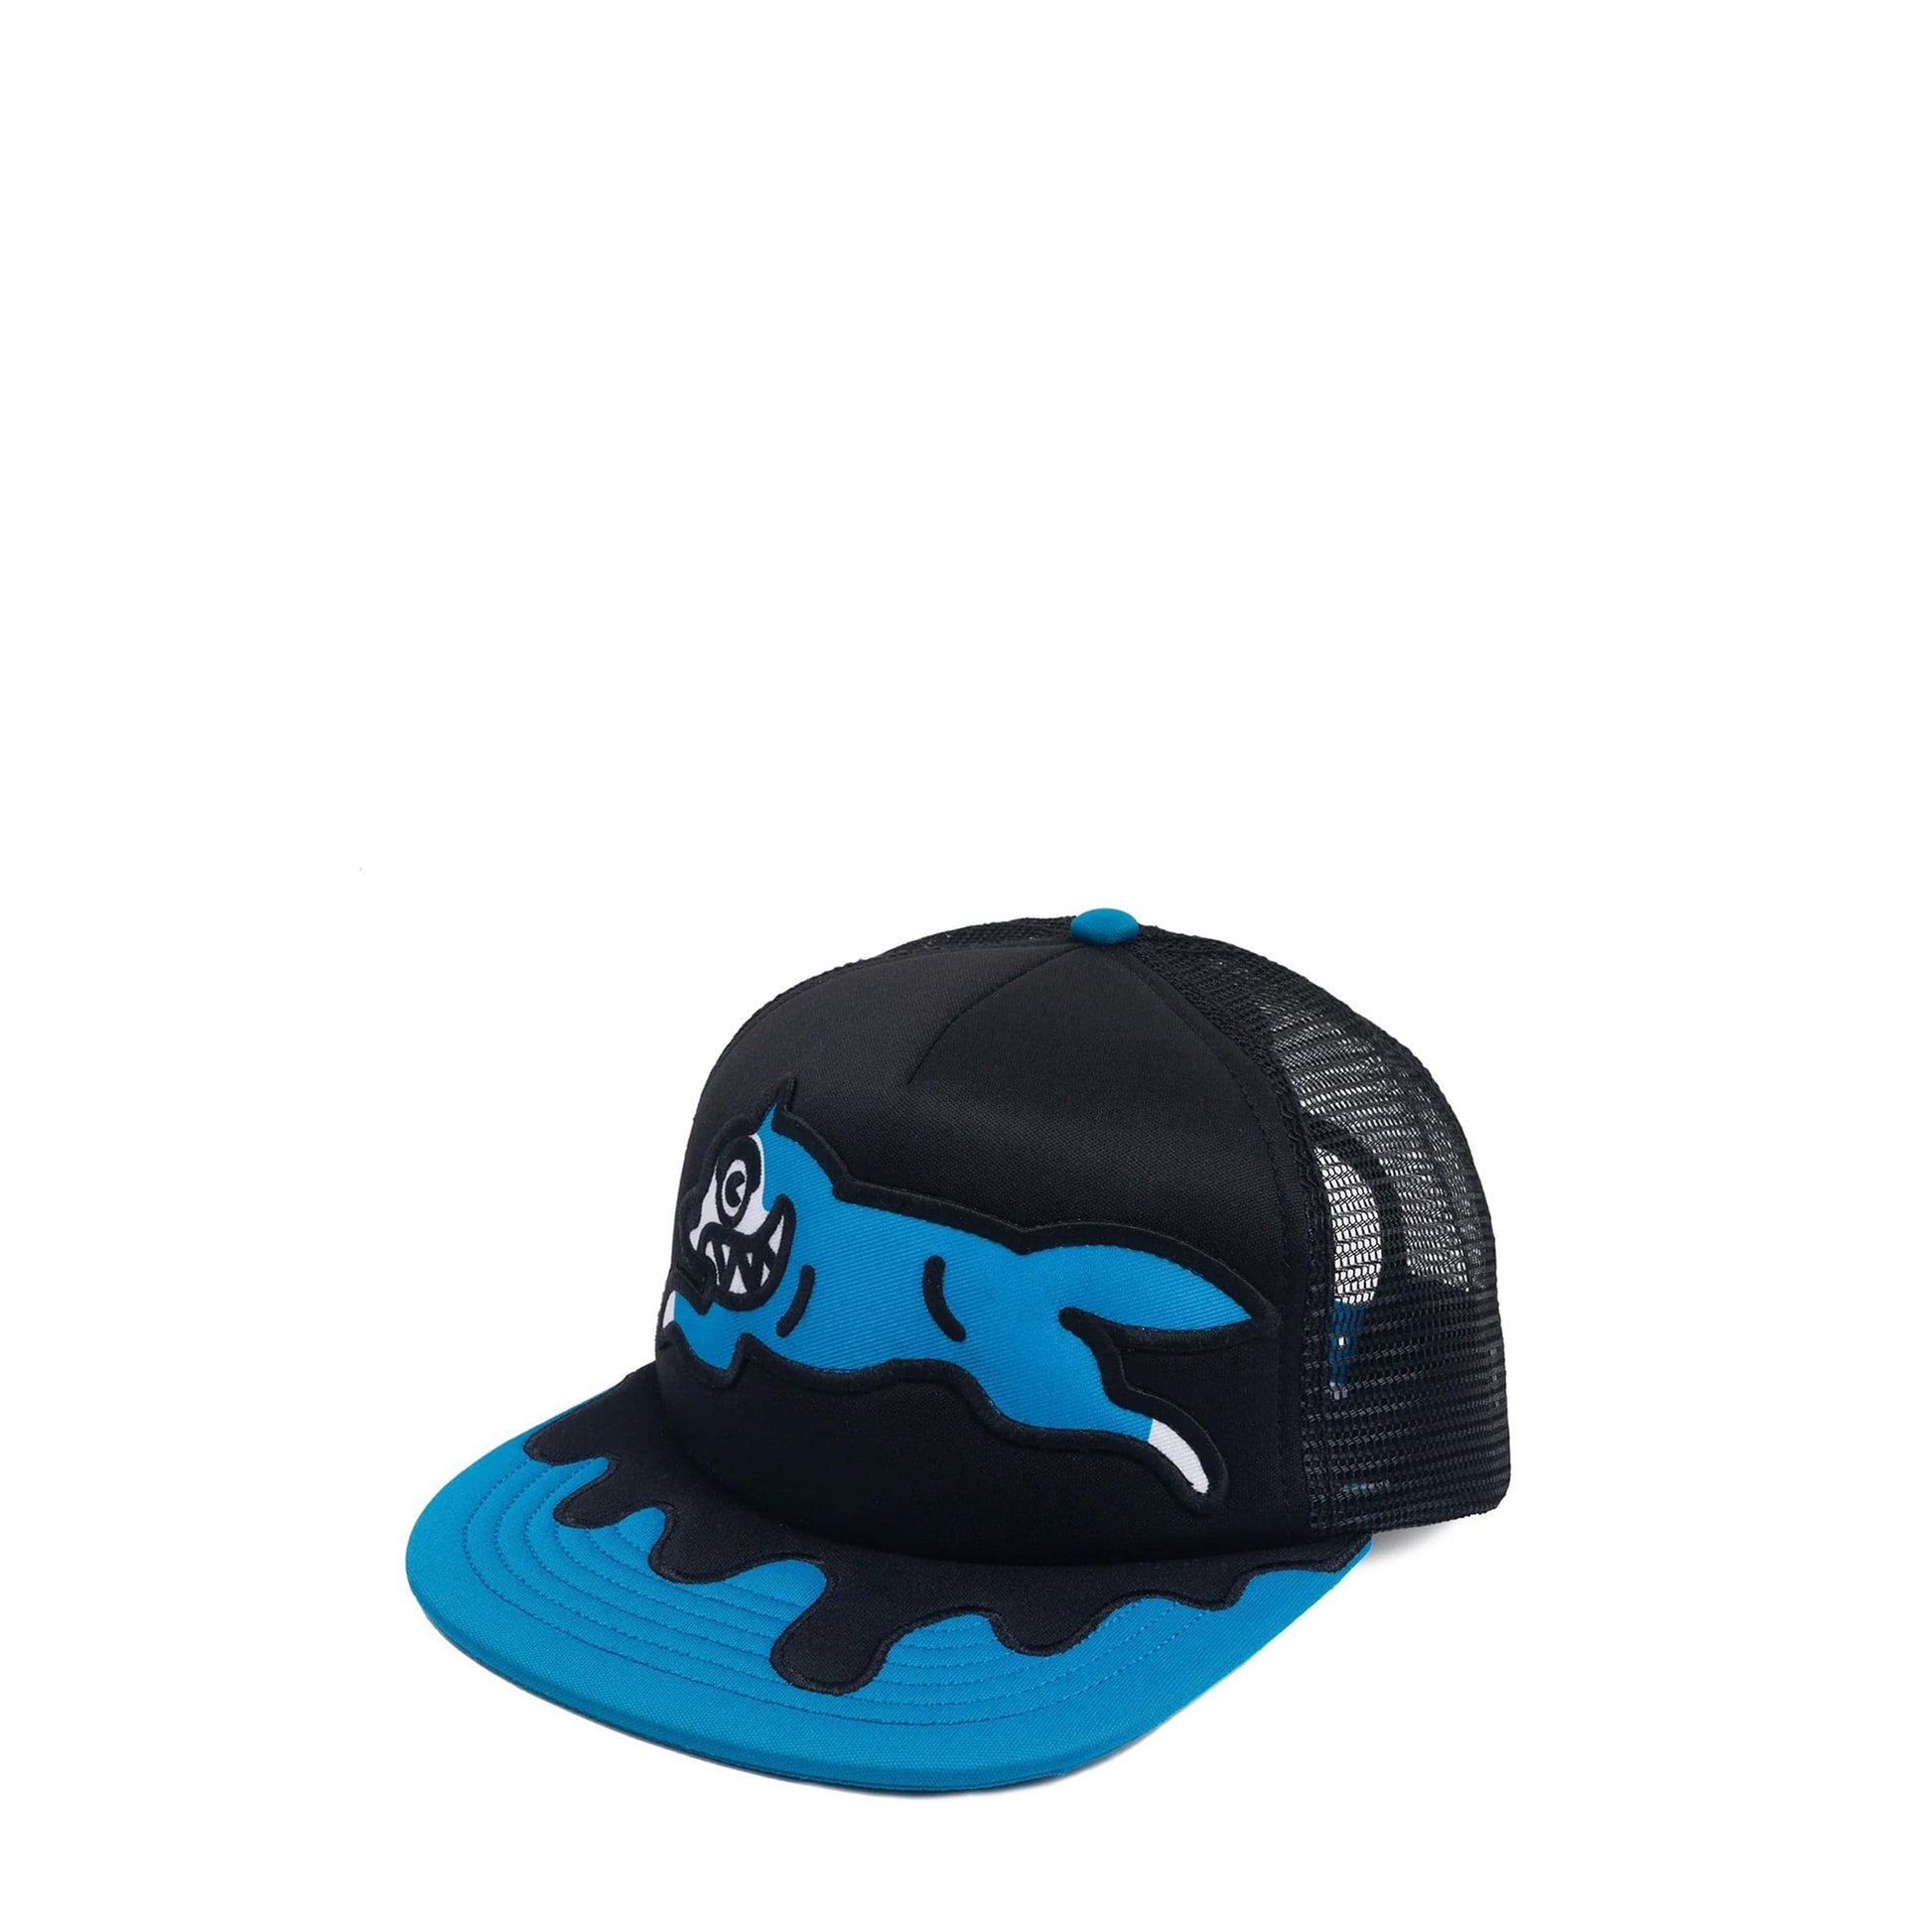 ICECREAM Headwear BLACK / O/S ROYAL TRUCKER HAT